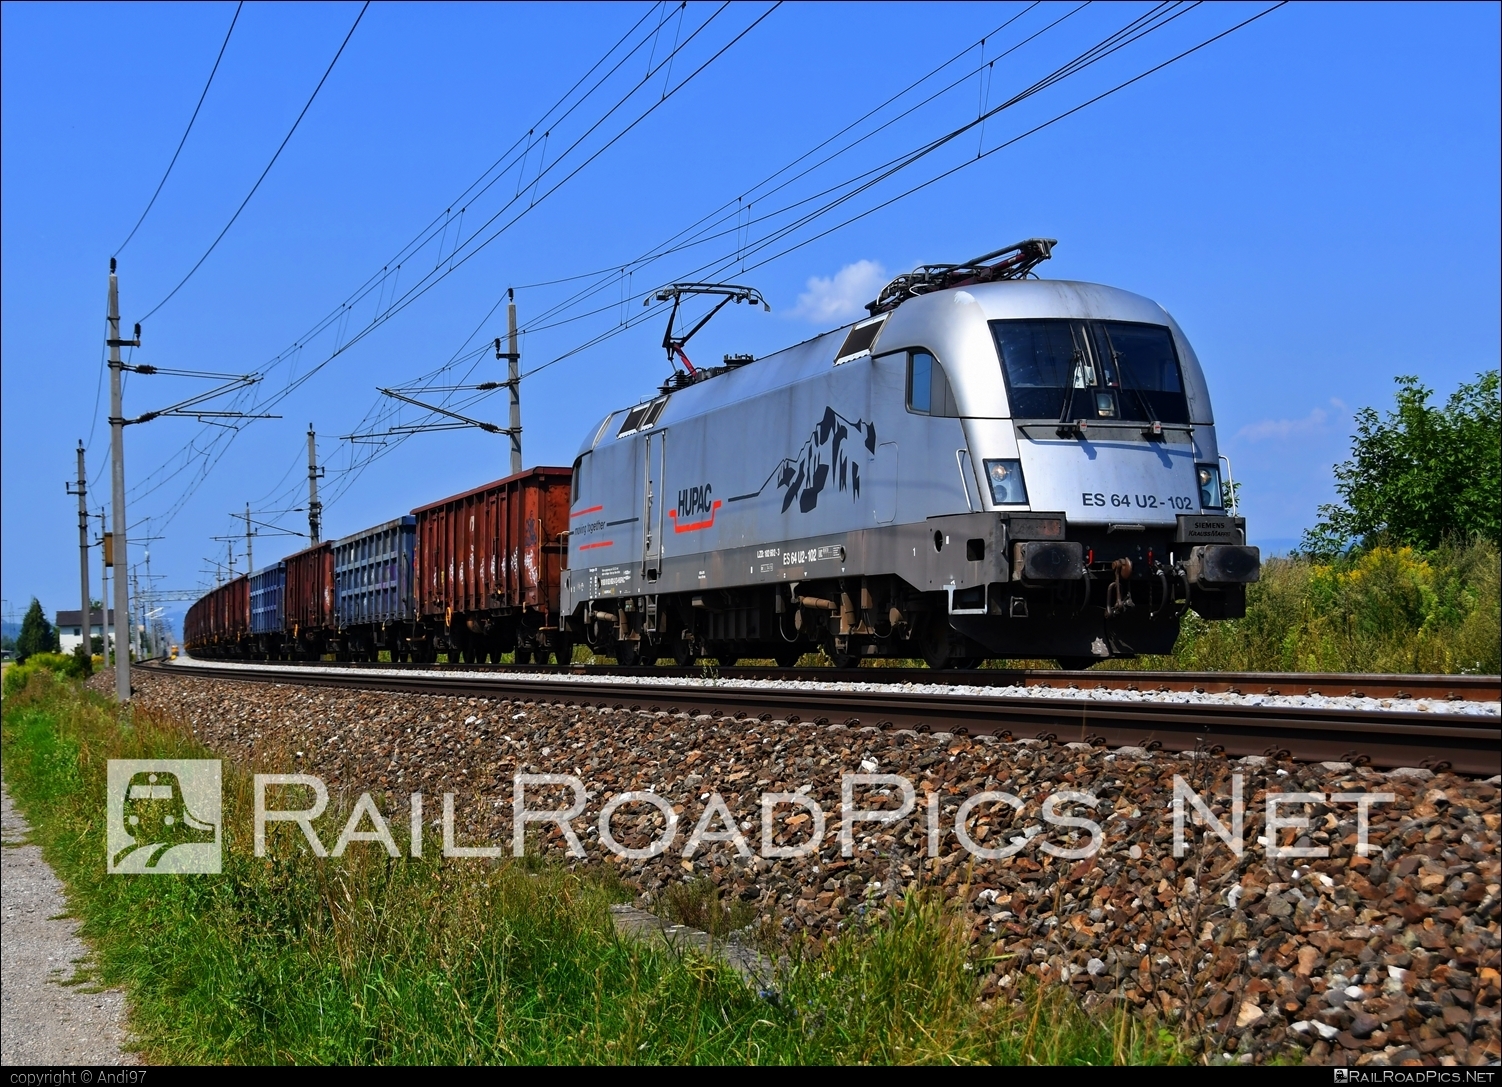 Siemens ES 64 U2 - 182 602-3 operated by WRS Widmer Rail Services Personal AG #es64 #es64u2 #eurosprinter #hupac #hupacSA #openwagon #siemens #siemensEs64 #siemensEs64u2 #siemenstaurus #taurus #tauruslocomotive #wrs